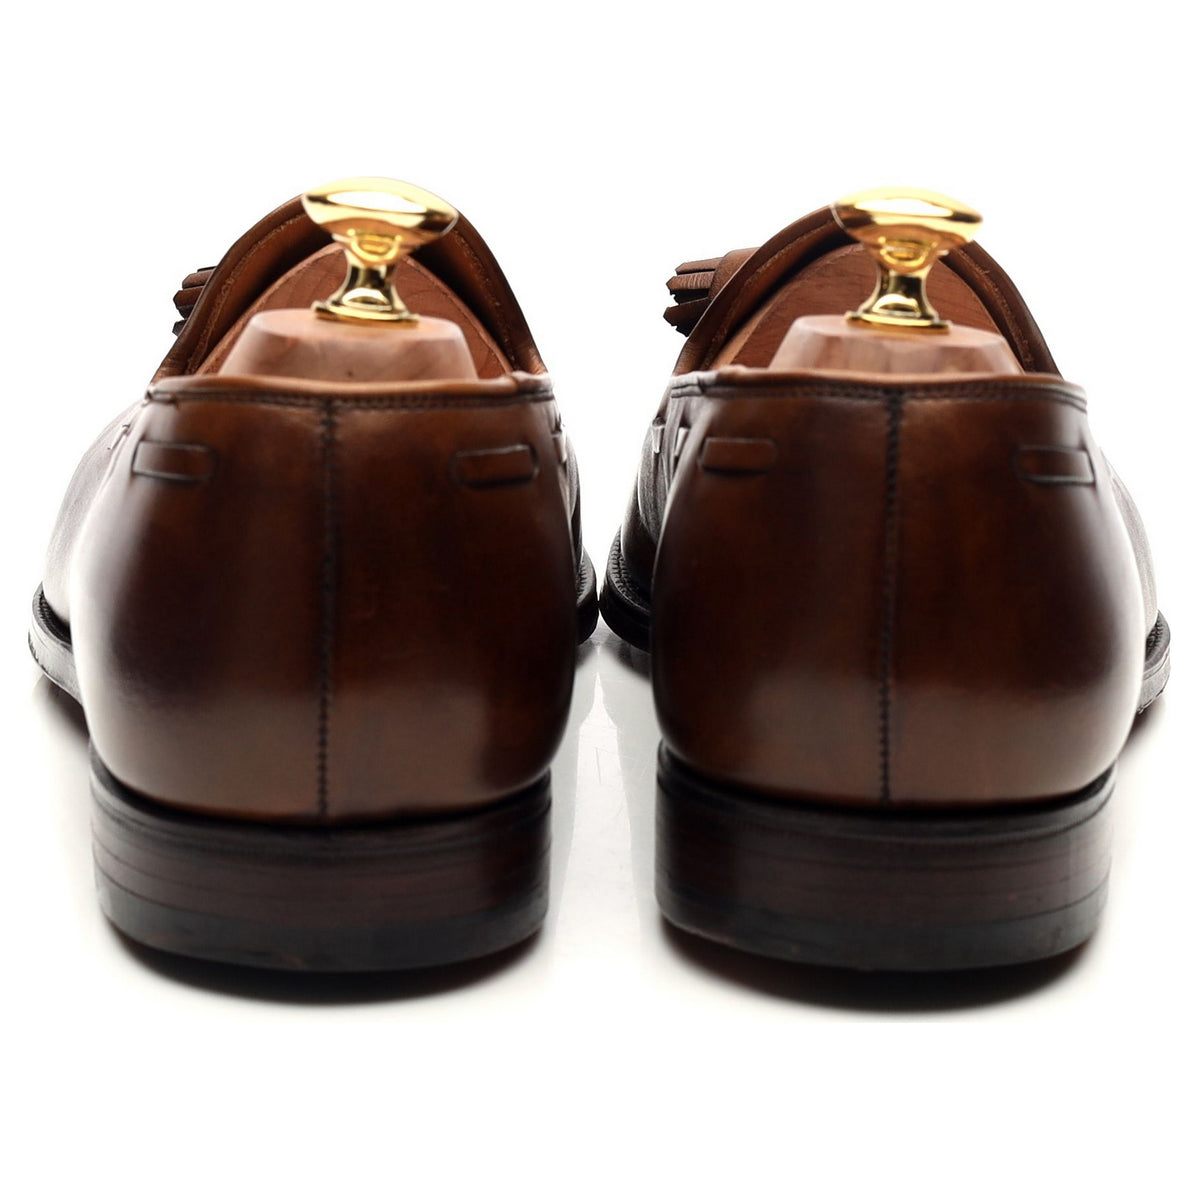 &#39;Cavendish 2&#39; Dark Brown Leather Tassel Loafers UK 9.5 E